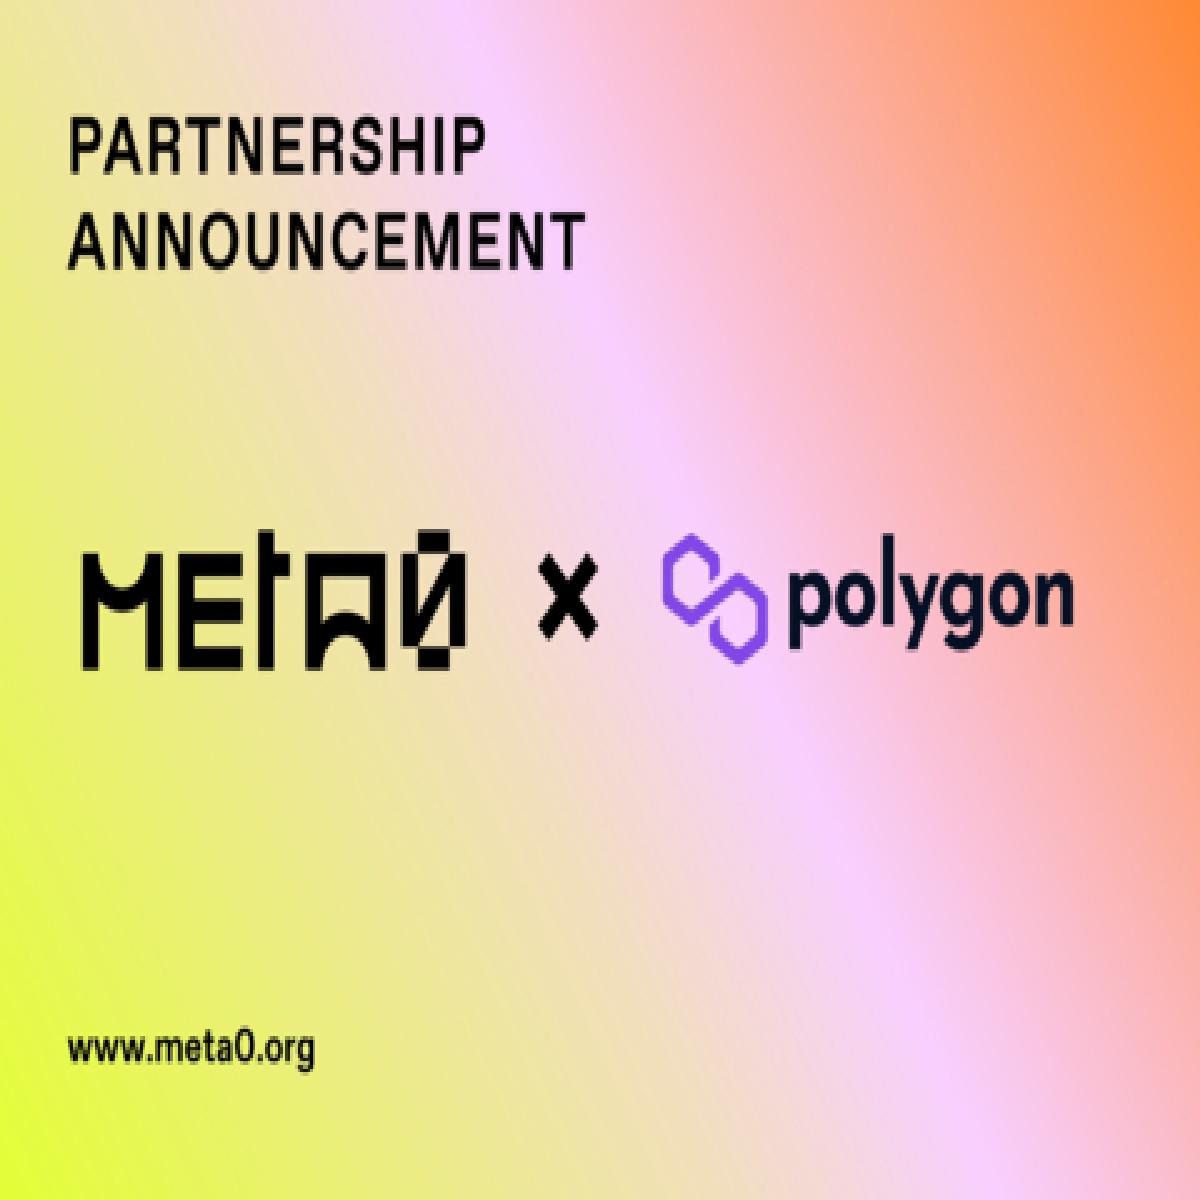 Blockchain protocol for metaverses, Meta0, announces partnership with Polygon